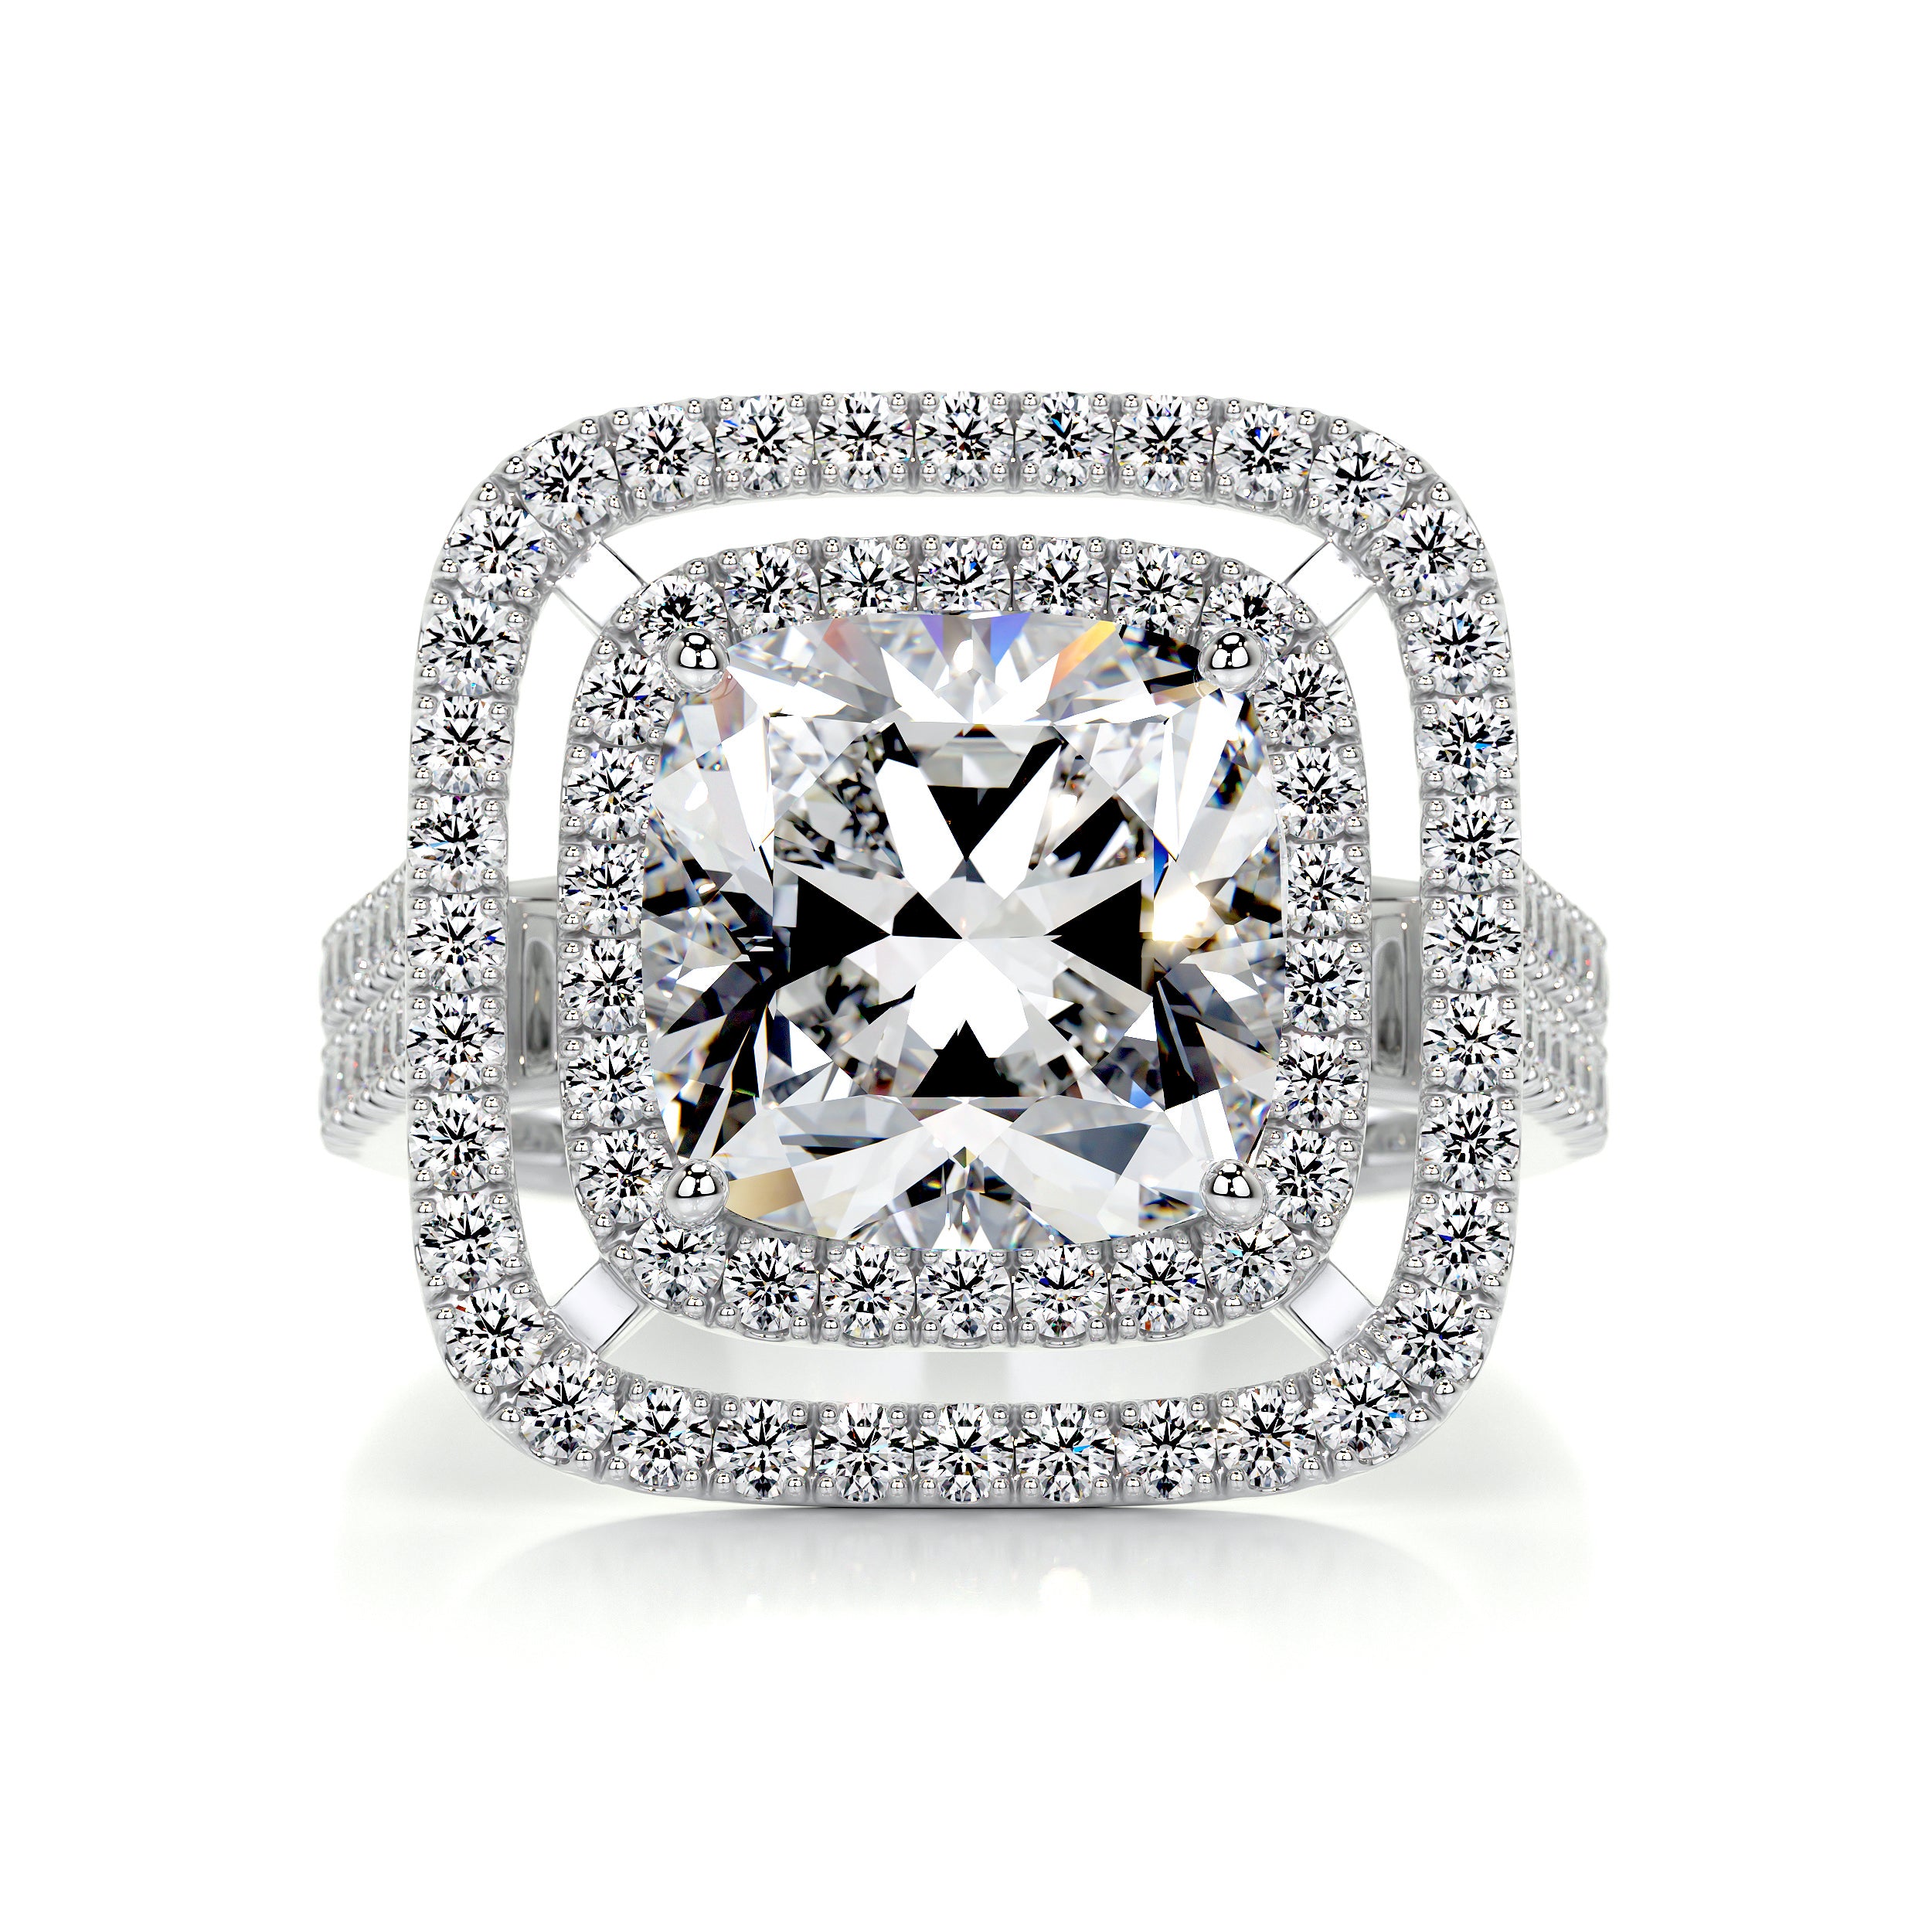 Piper Diamond Engagement Ring   (4 Carat) - 14K White Gold